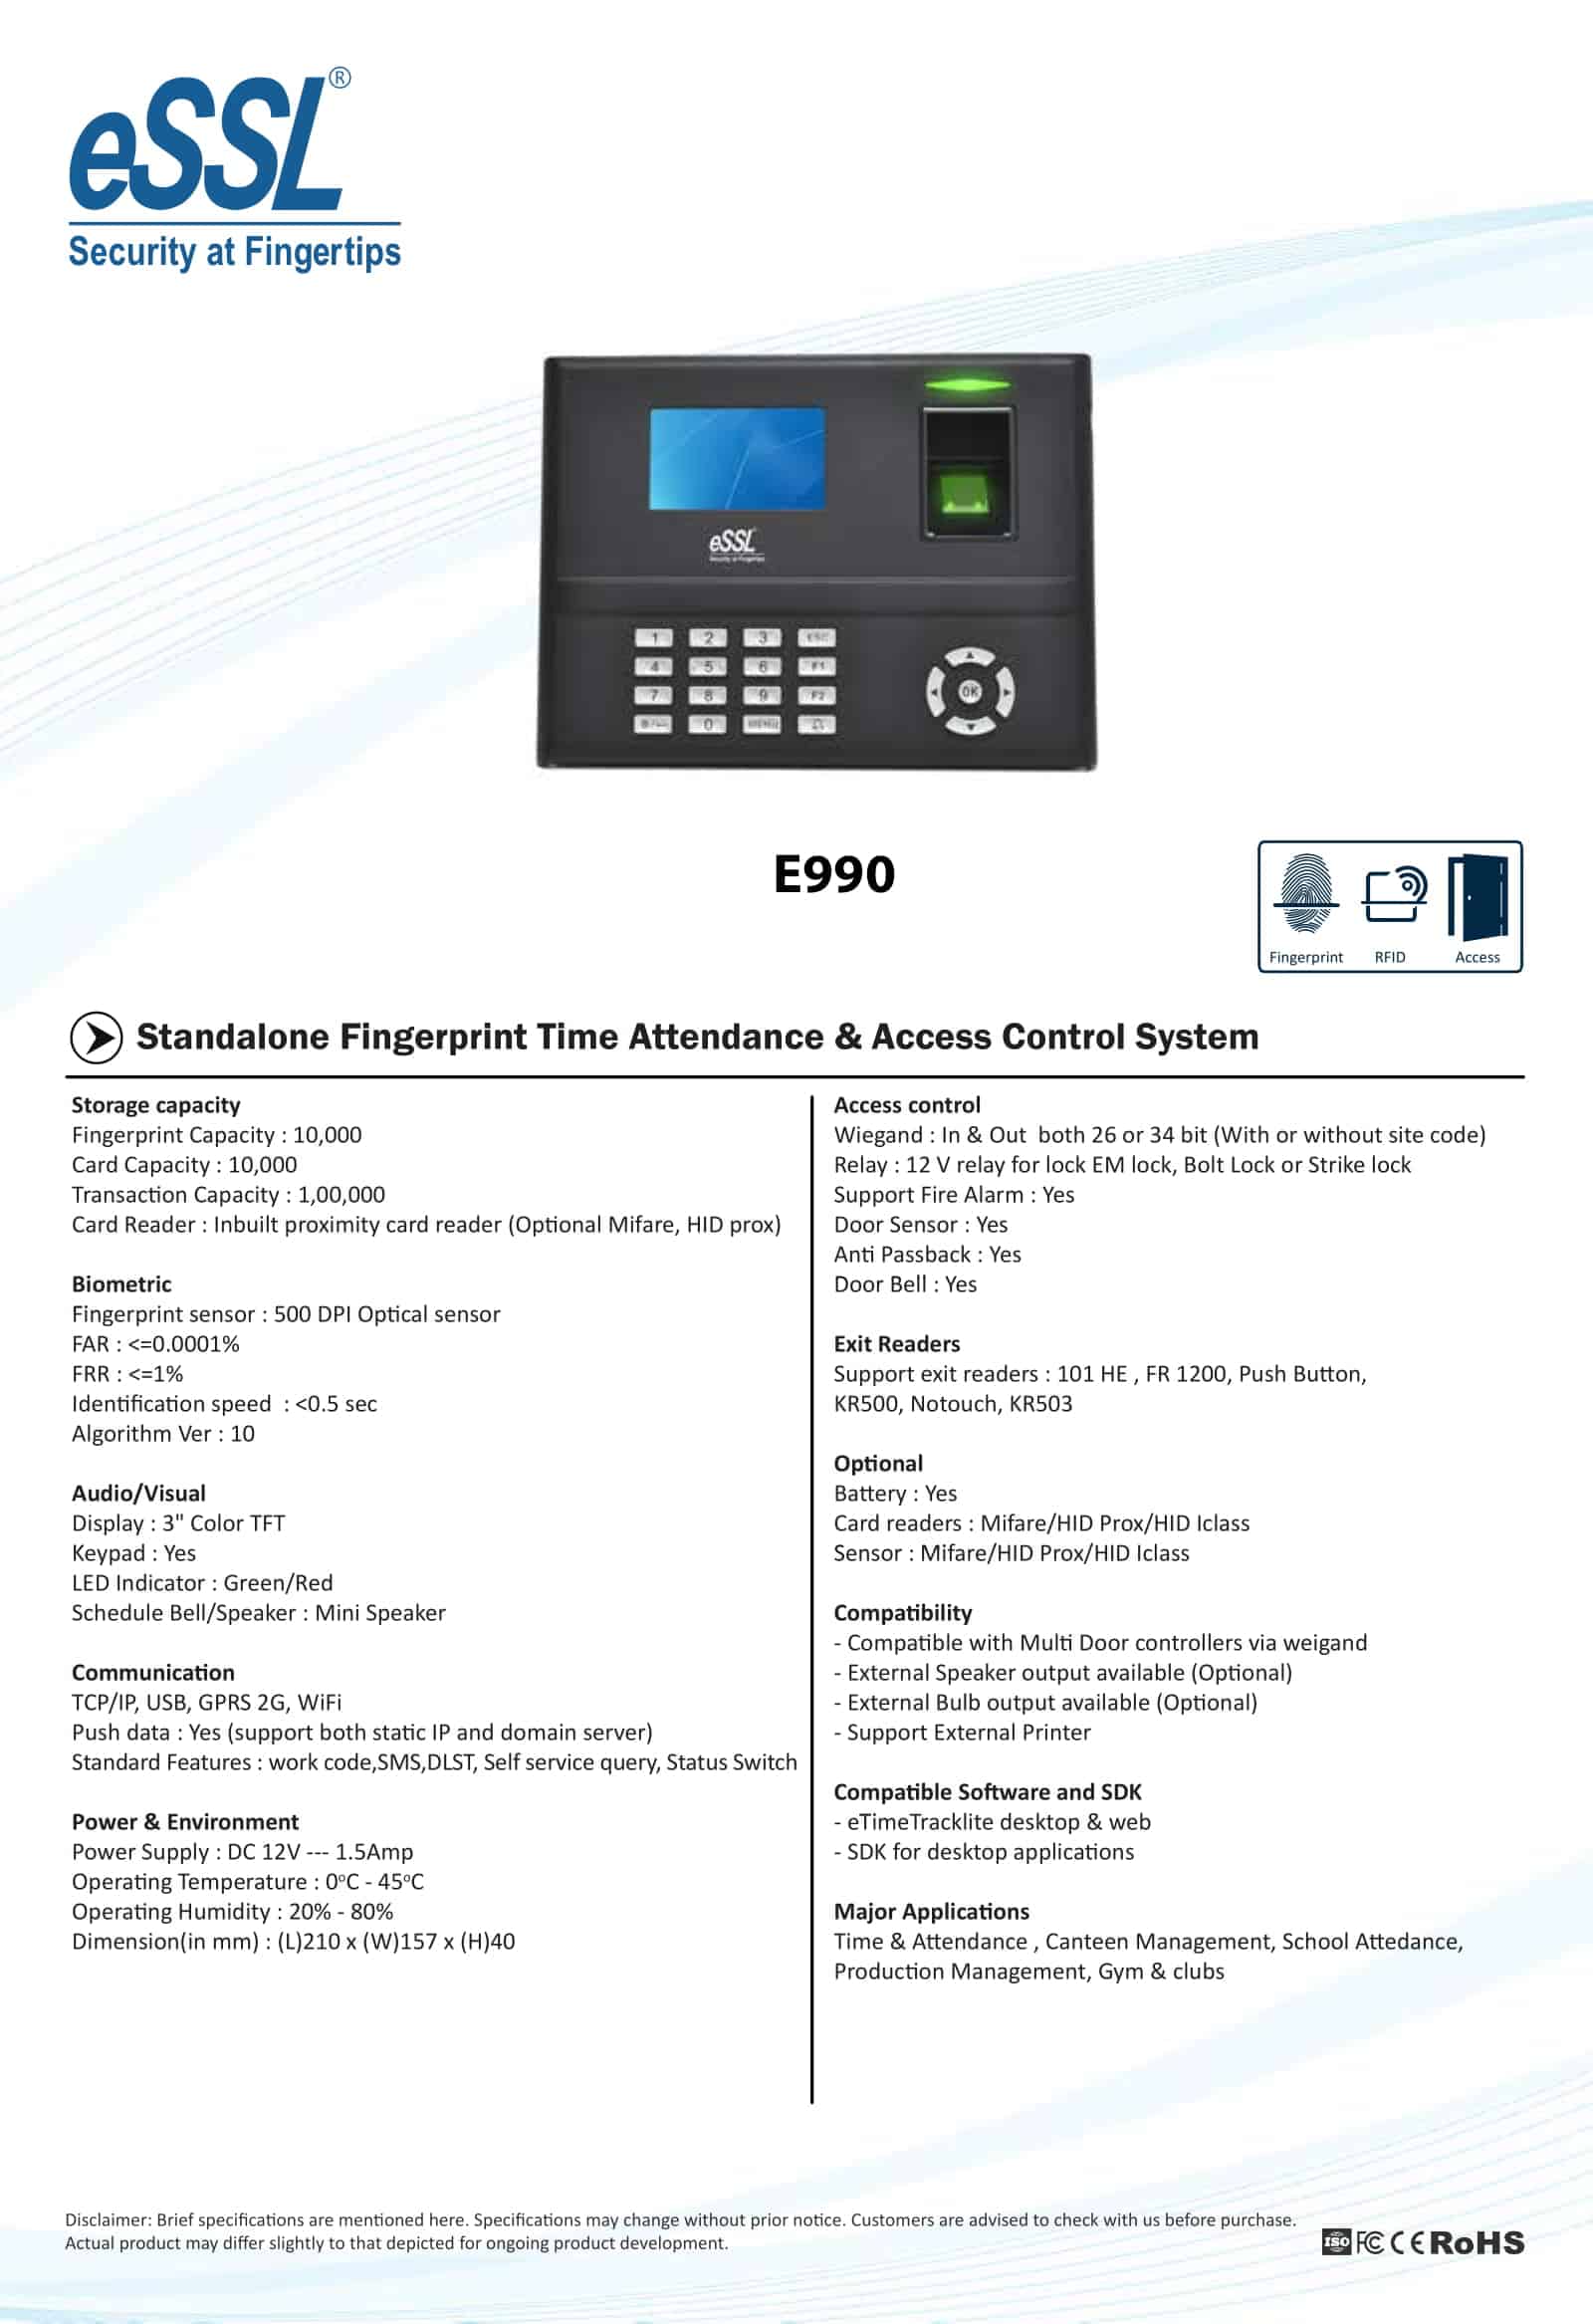 Standalone Fingerprint Time Attendance & Access Control System